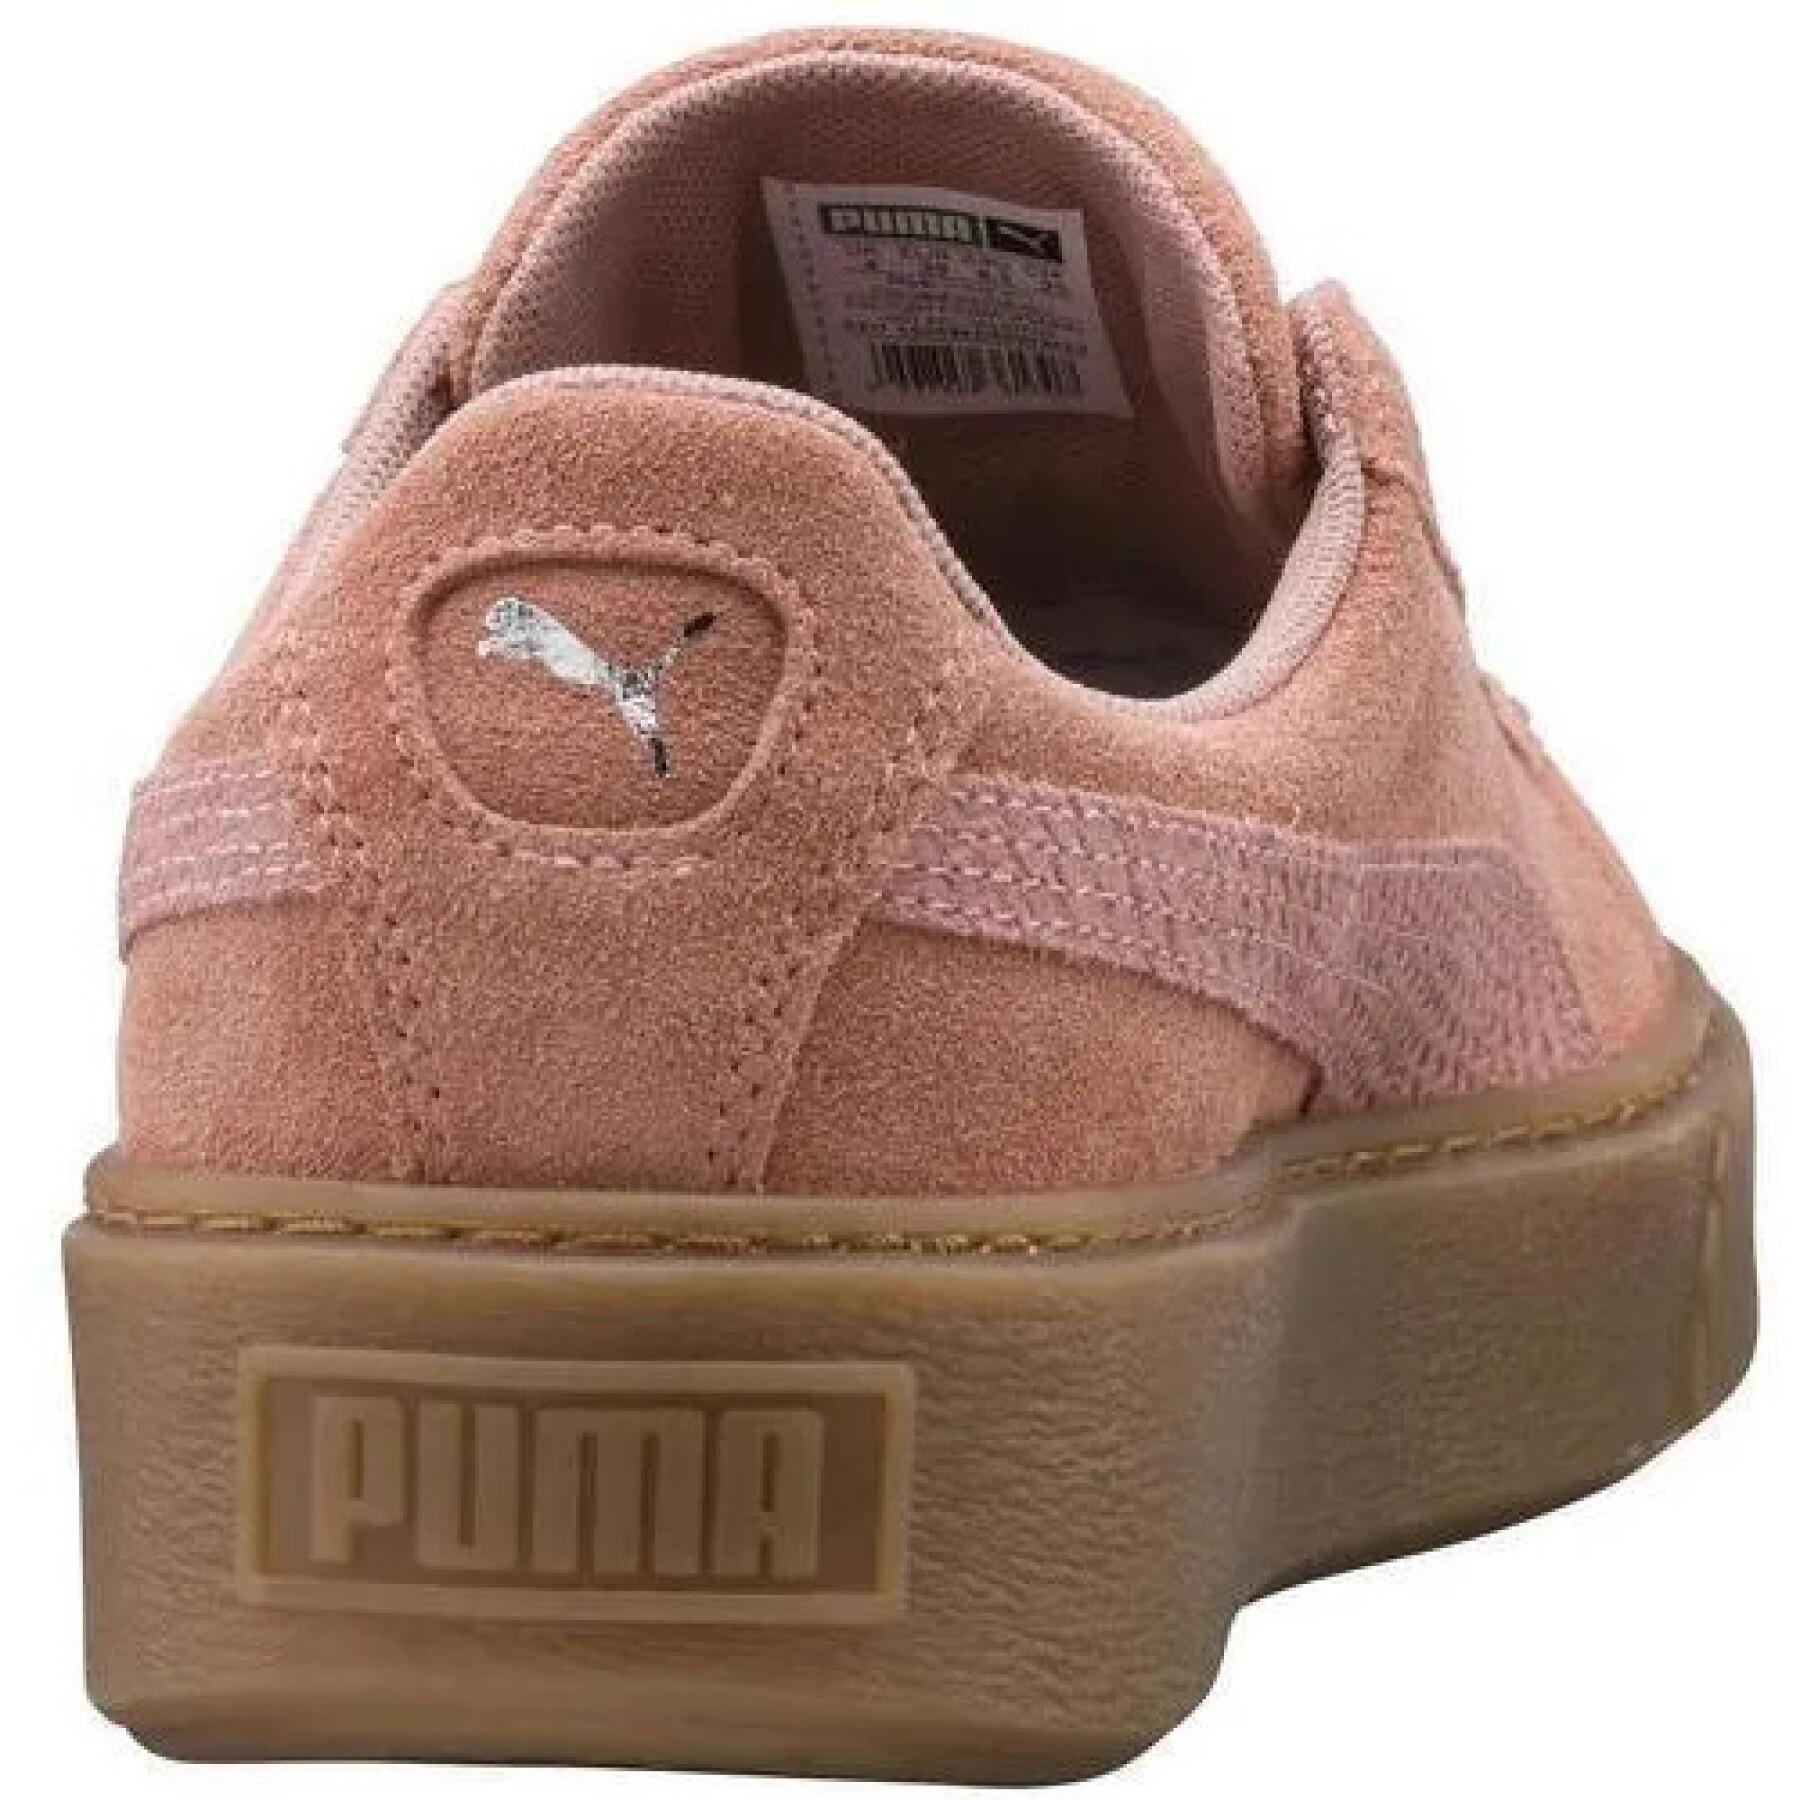 Women's sneakers Puma Suede Platform Gum